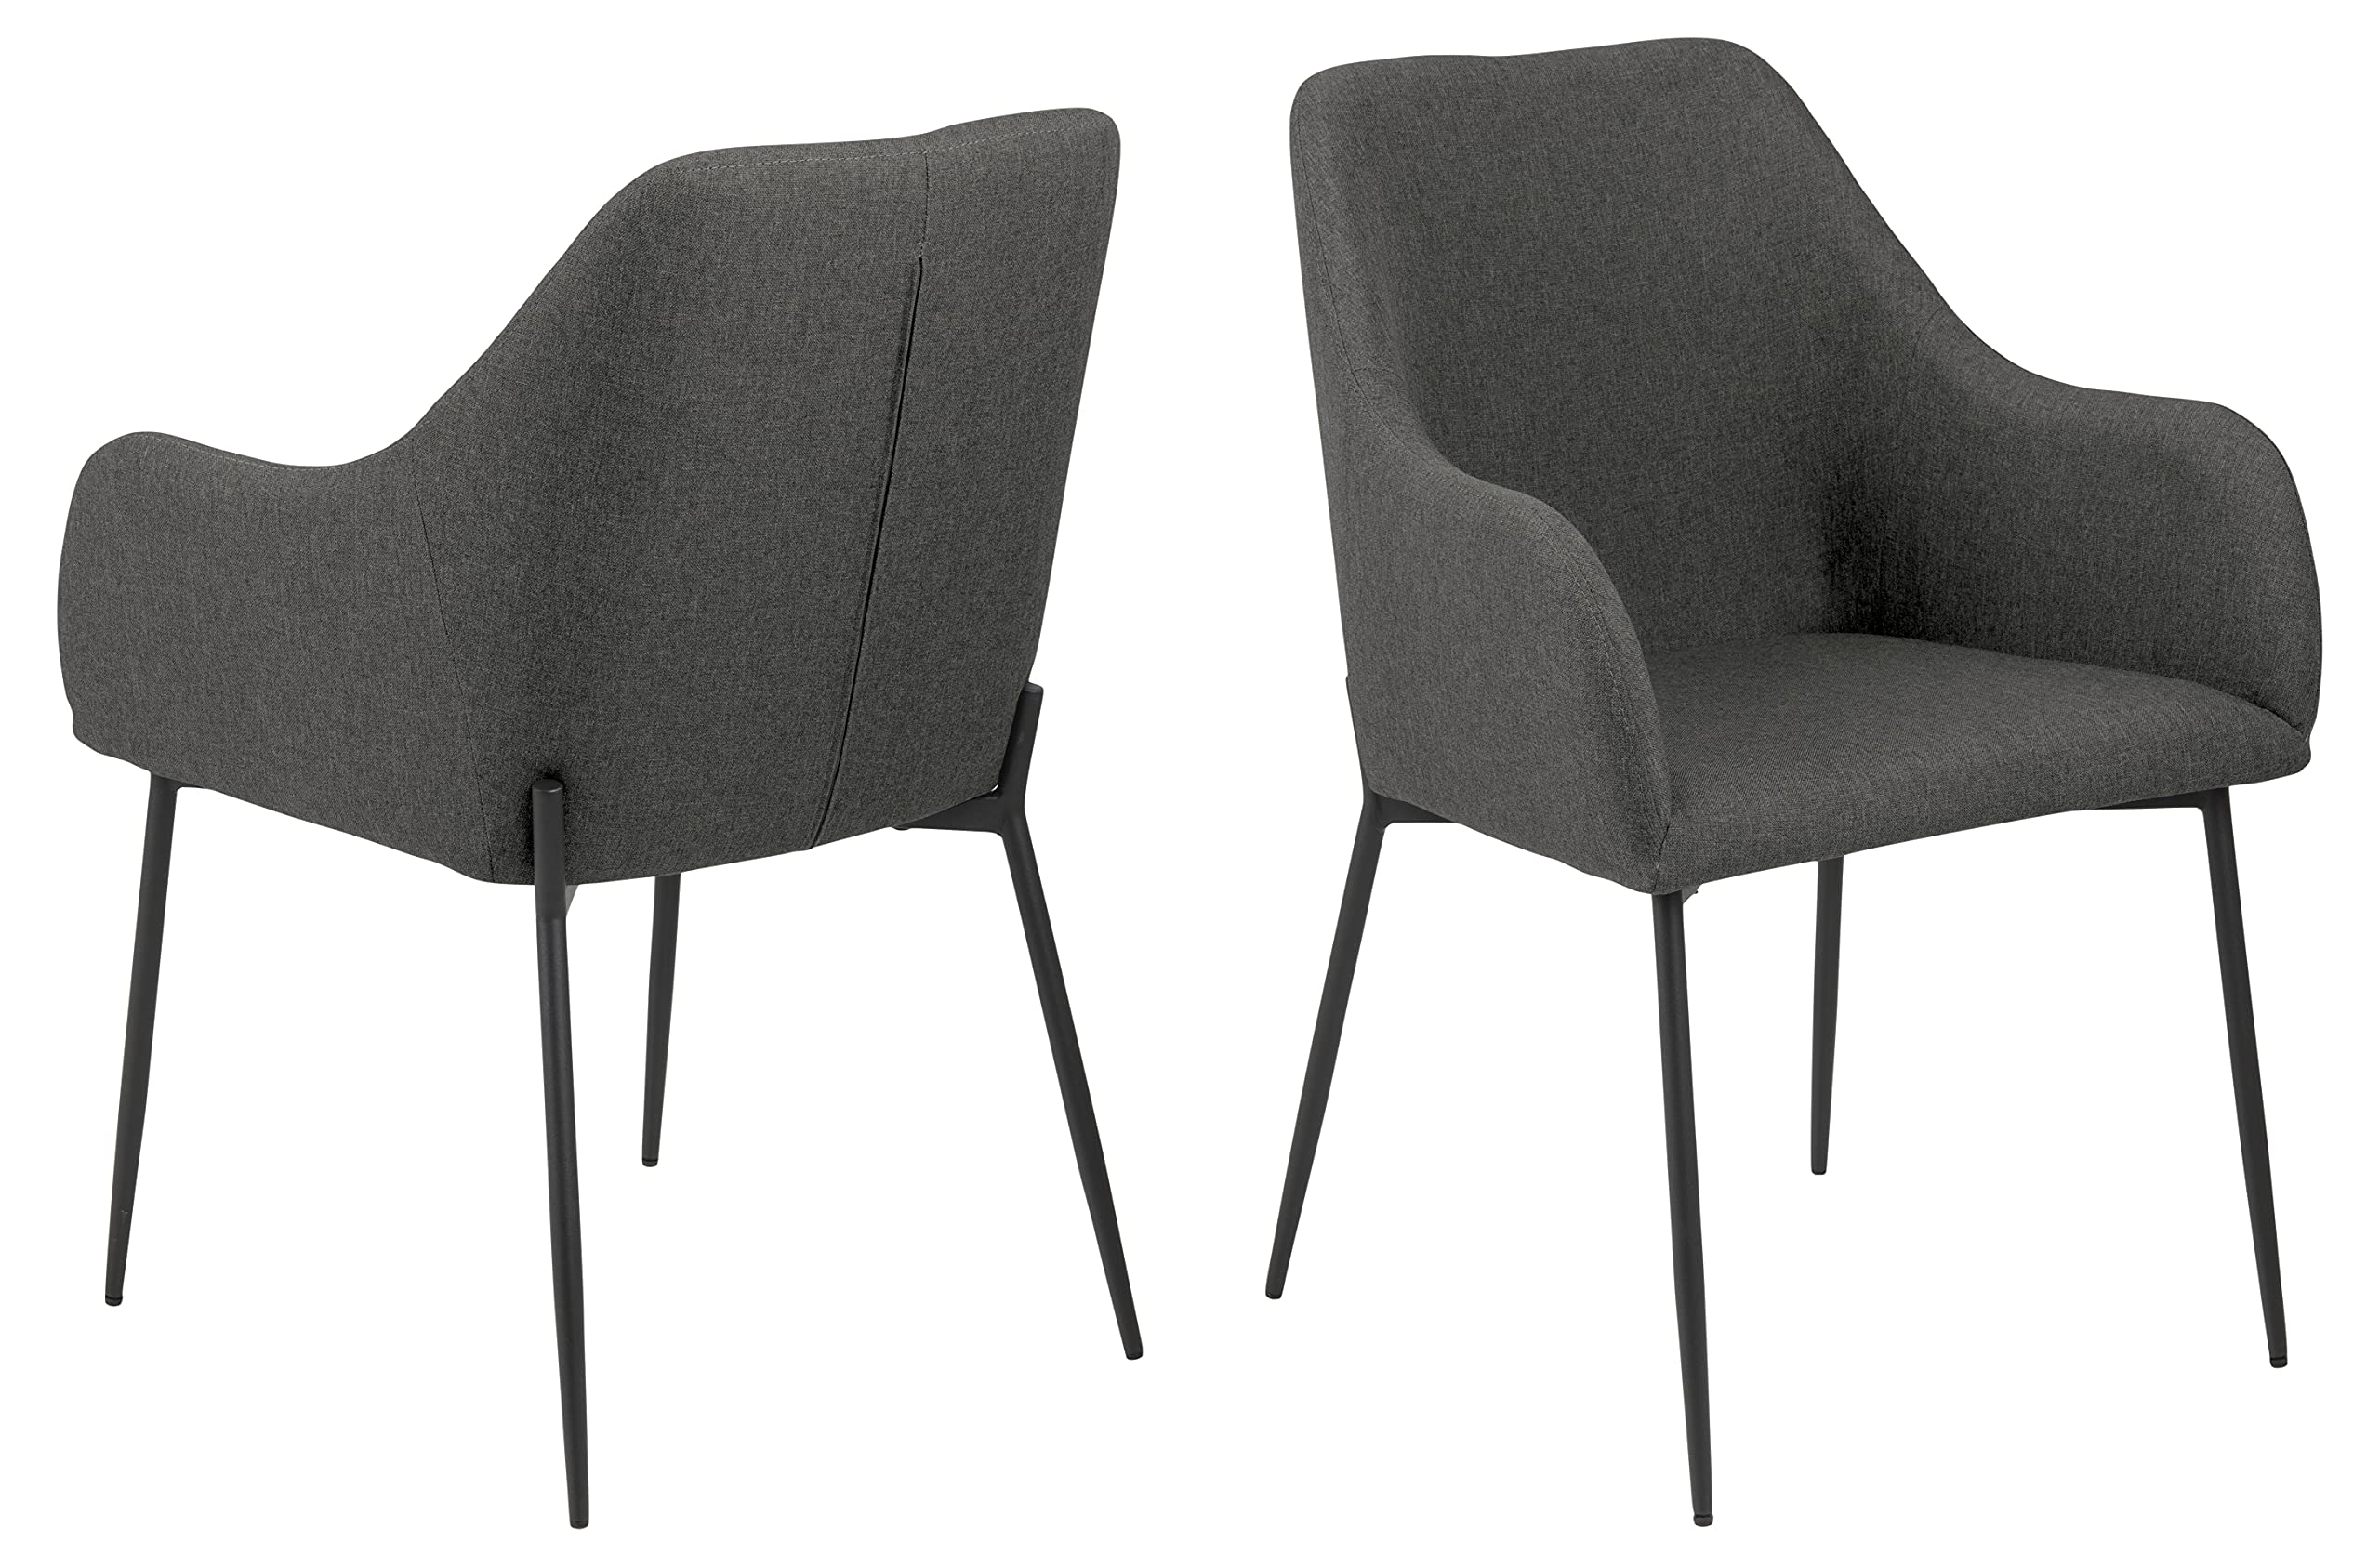 AC Design Furniture Juno Carver Esszimmerstühle, H: 83 x B: 57 x T: 55,5 cm, Grau/Schwarz, Stoff/Metall, 2 Stk.